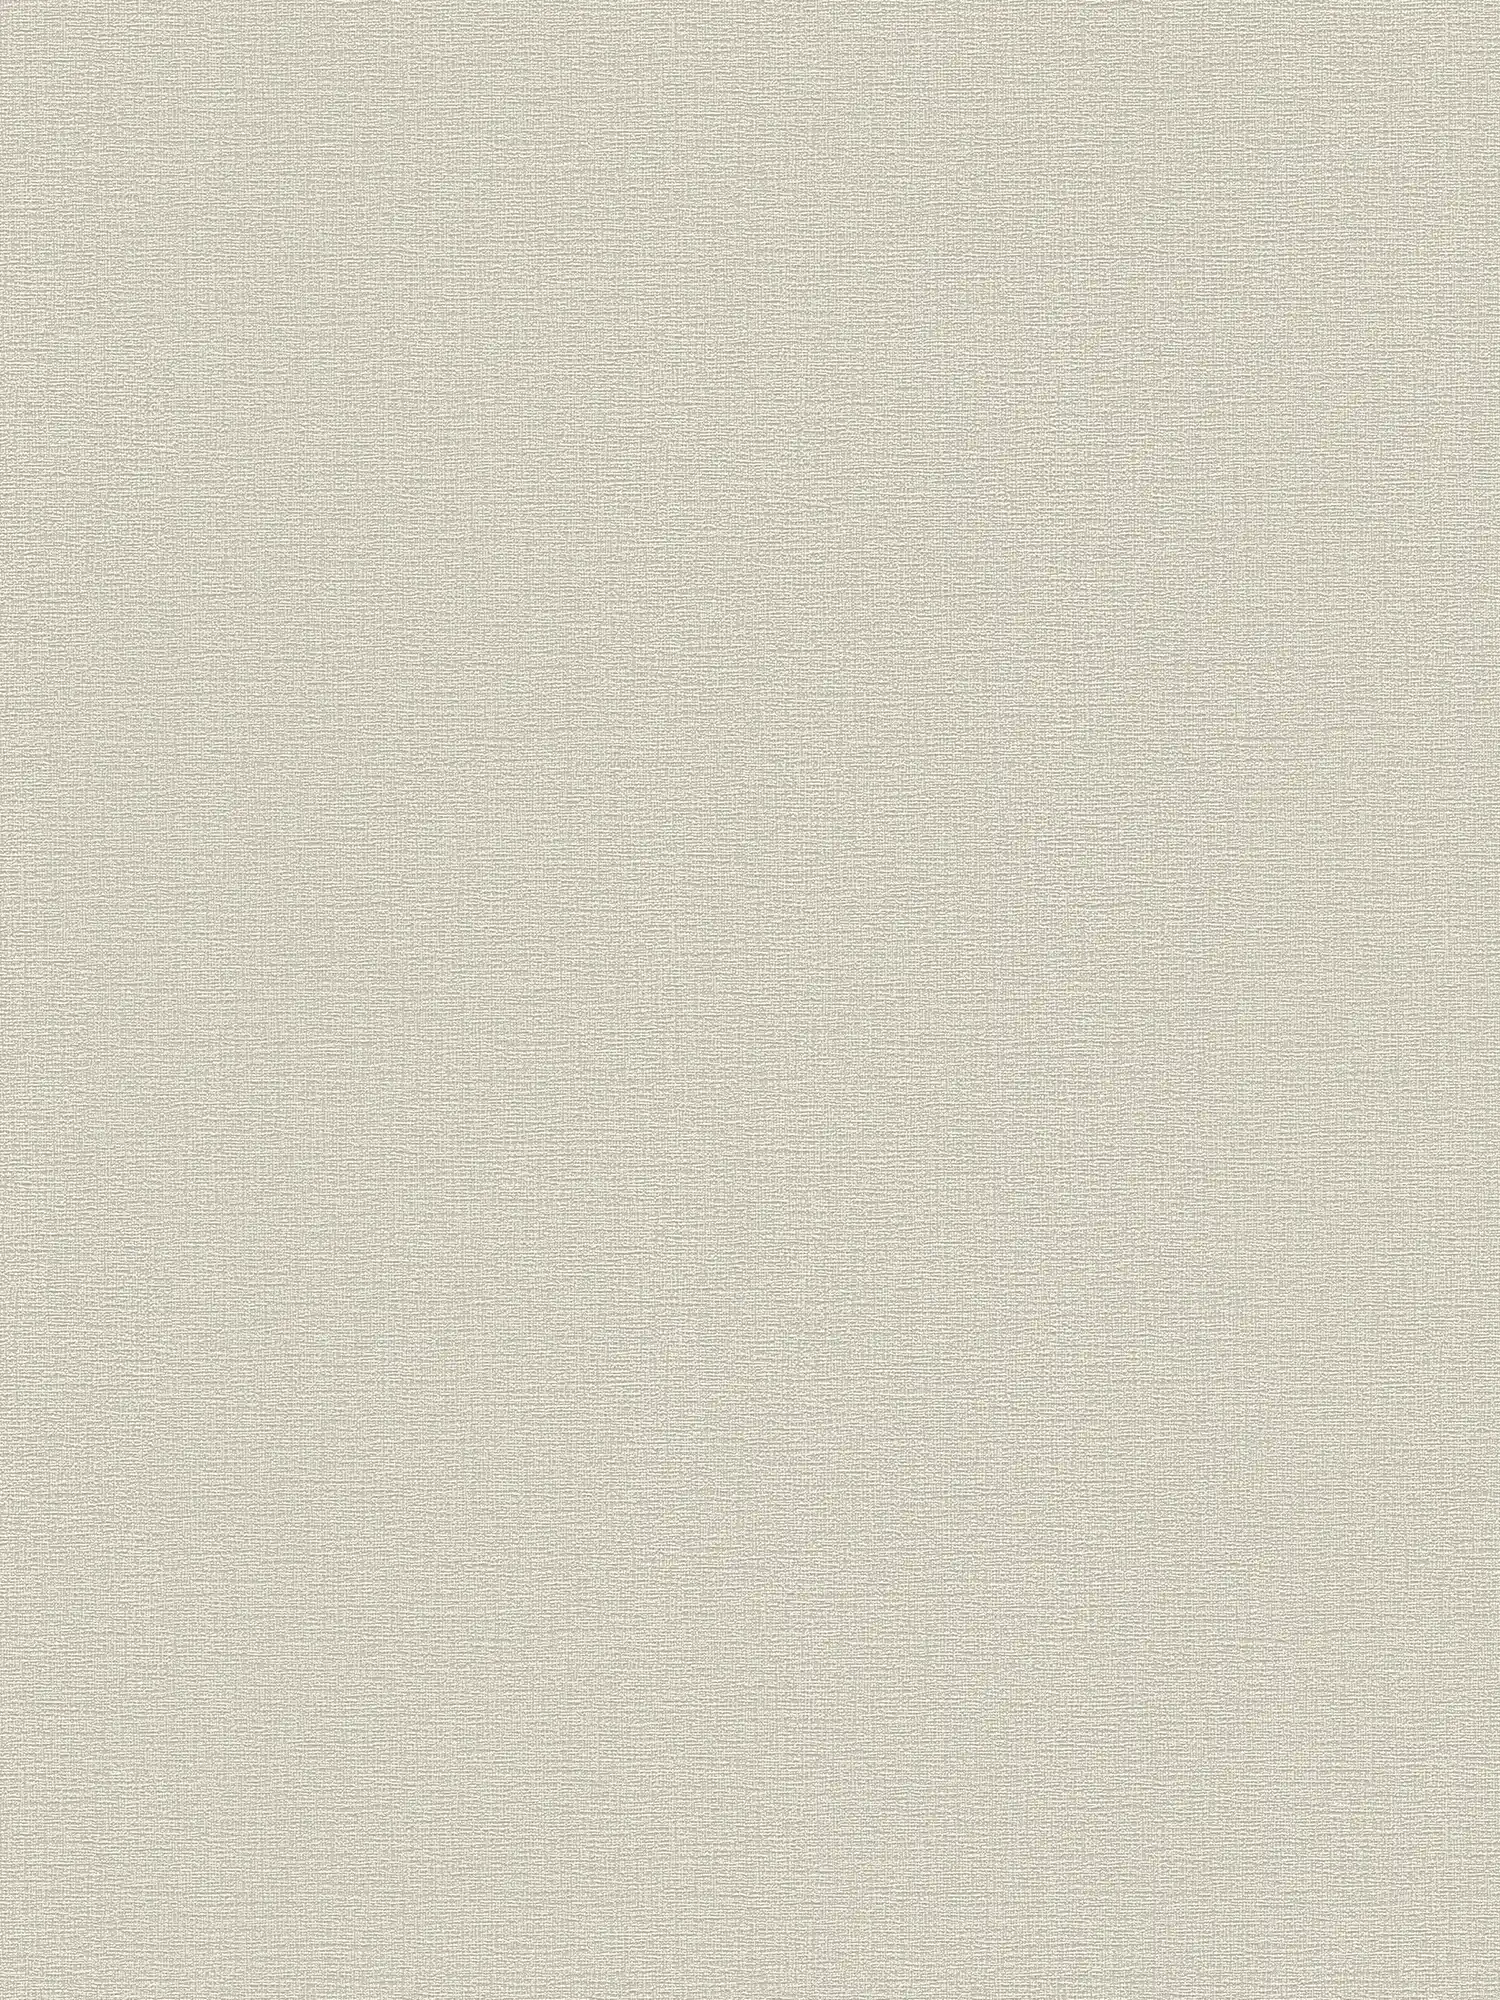 wallpaper beige grey with textile texture in vintage look
